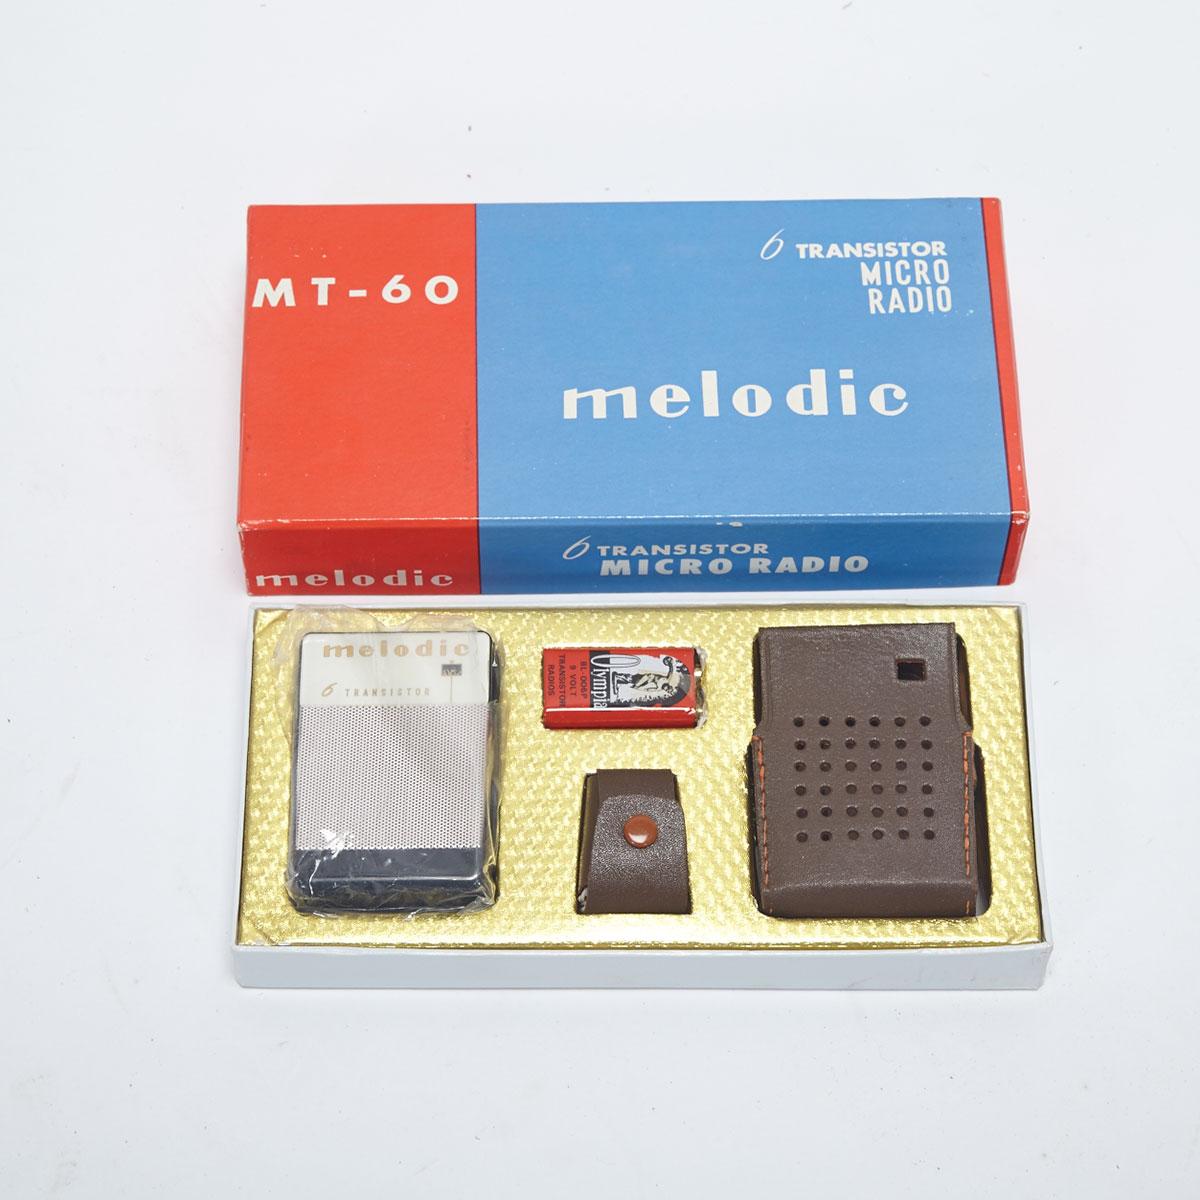 [New Old Stock] Melodic Model MT-60 6 Transistor Micro Radio, c1965